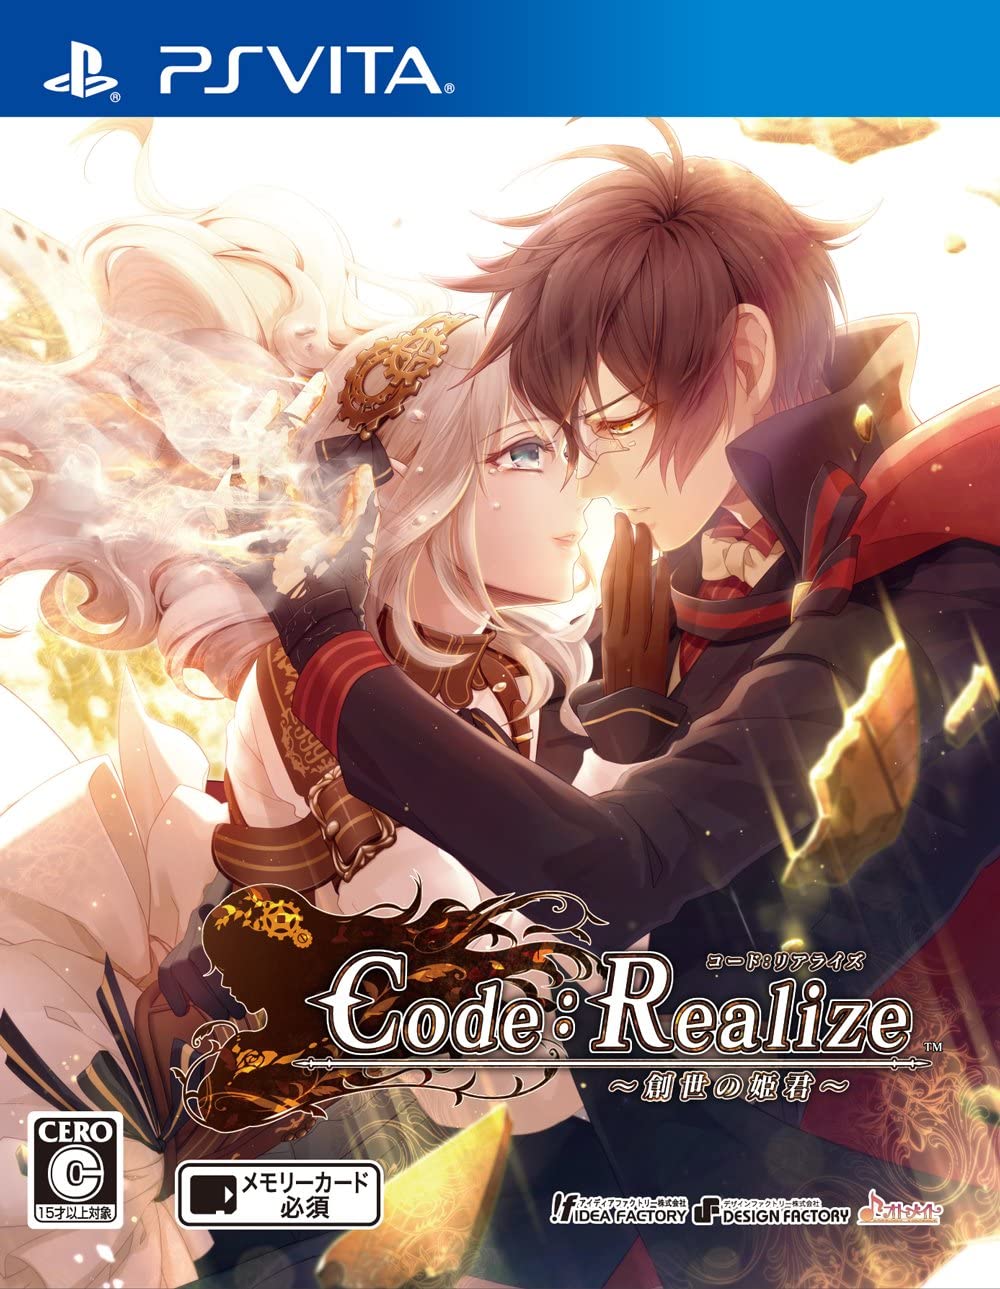 Code:Realize ~創世の姫君~ - PS Vita